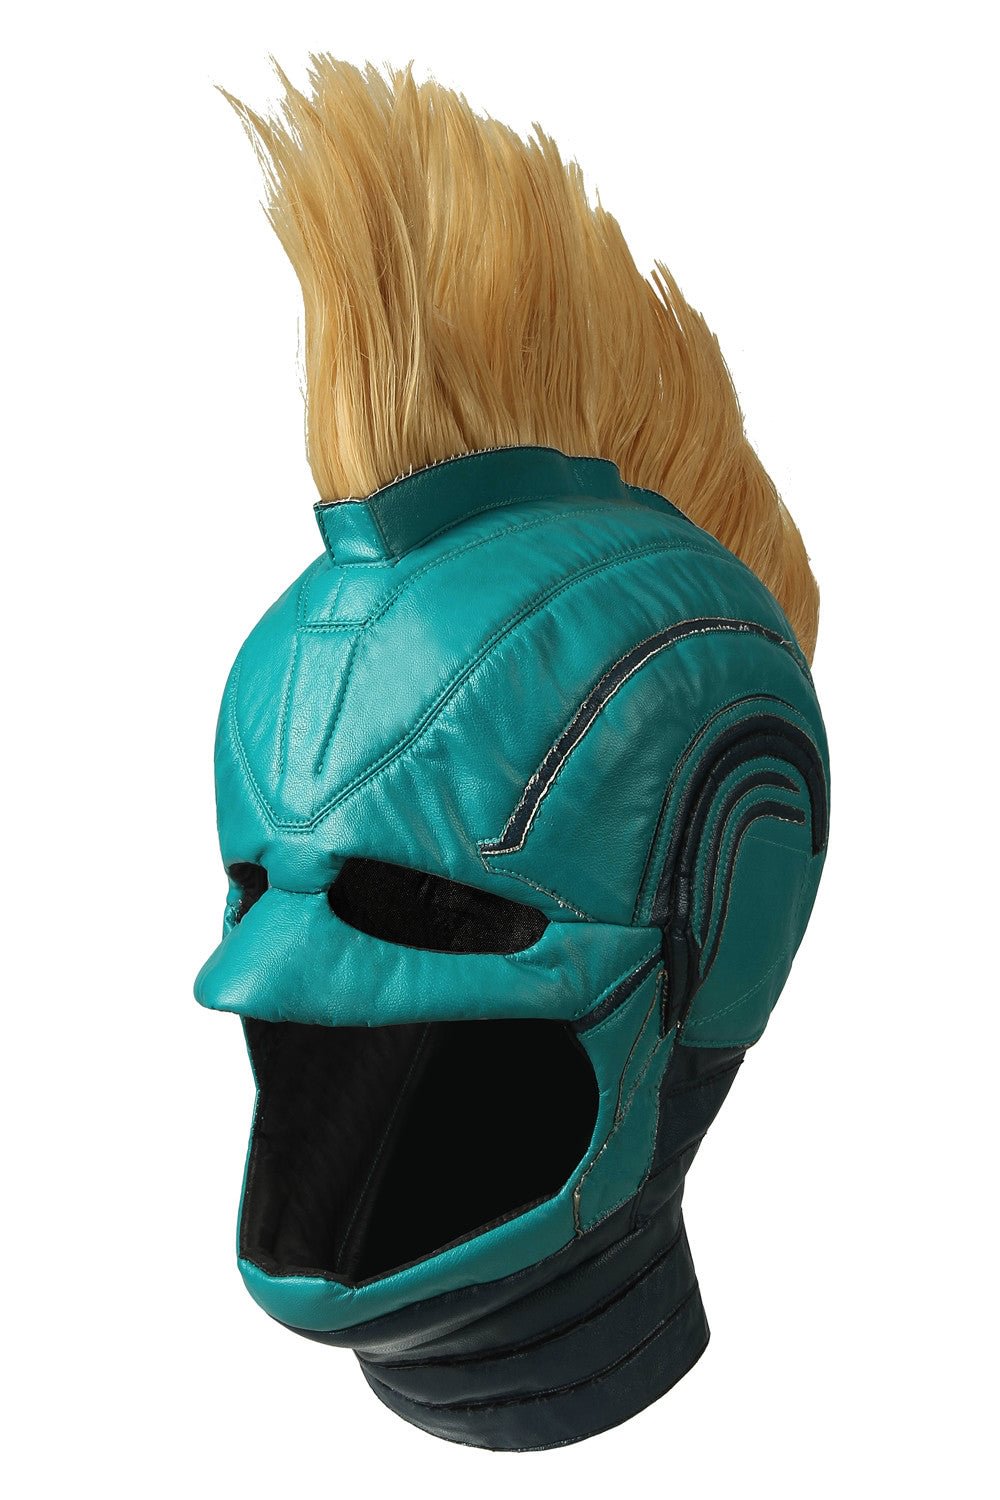 Captain Marvel Yon Rogg Cosplay Mask Headgear